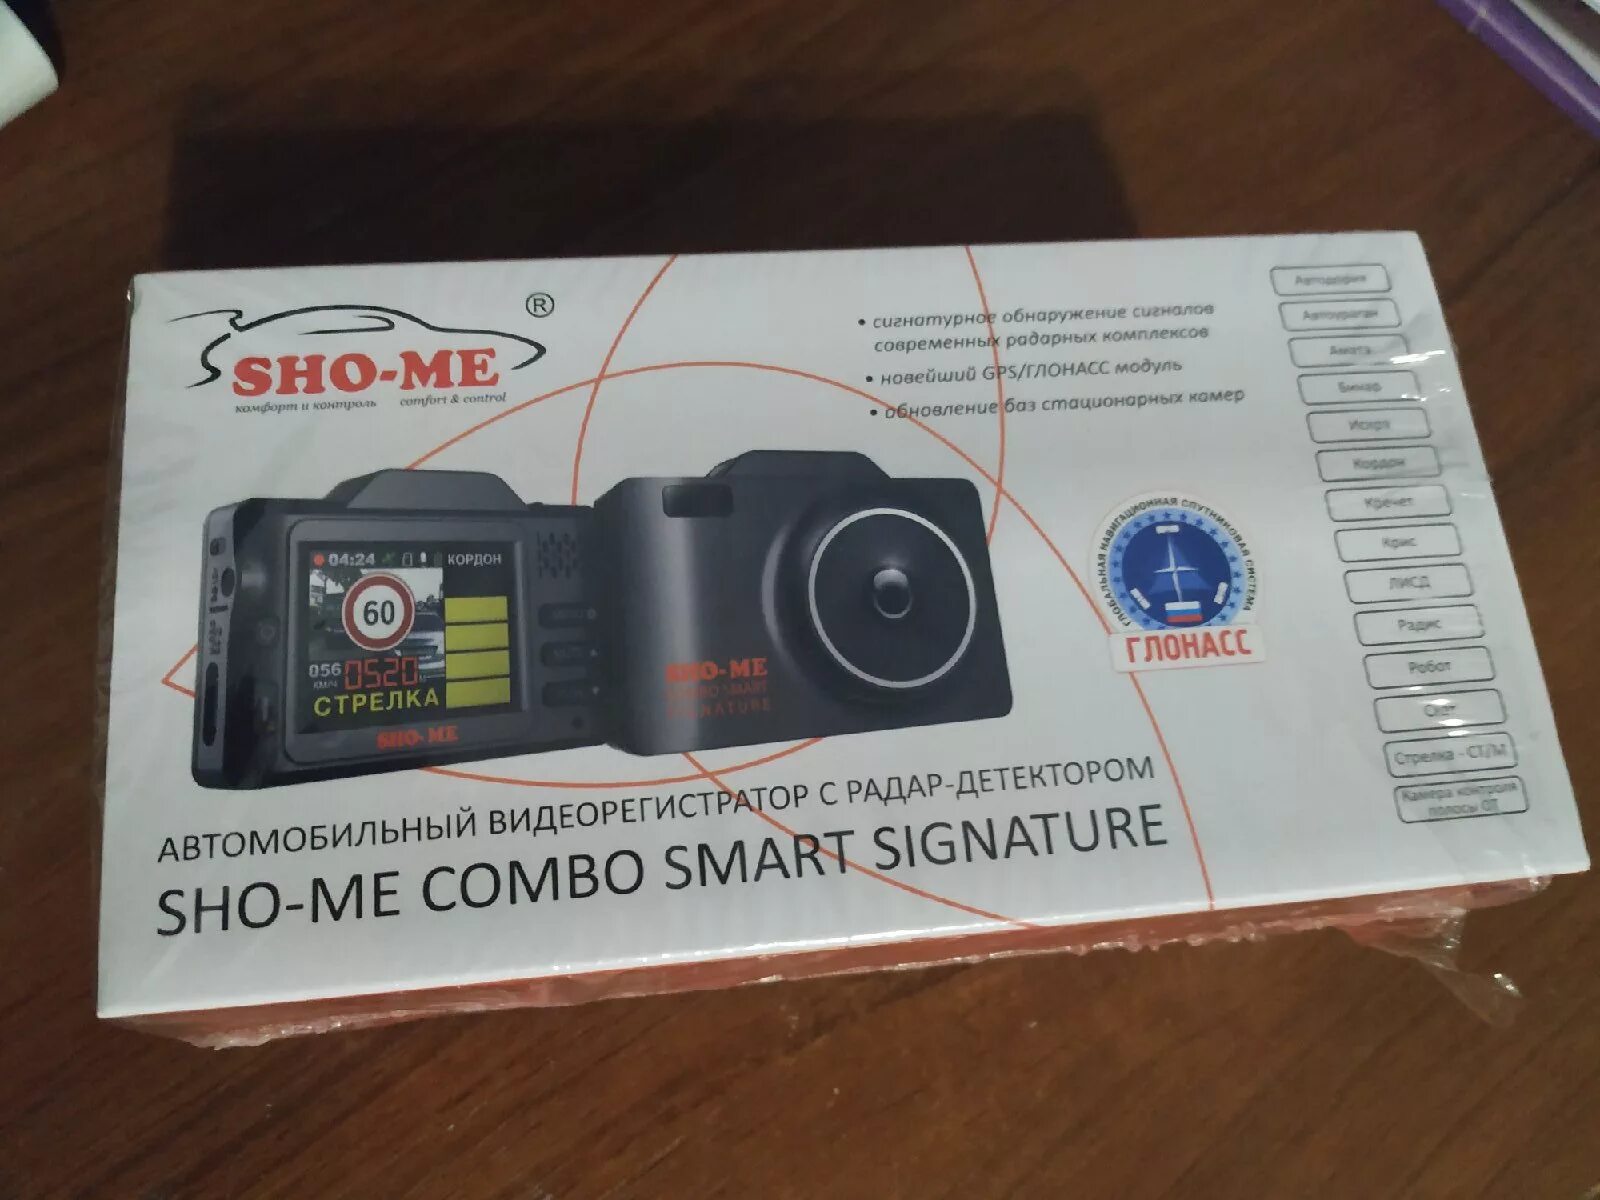 Sho-me Combo Smart Signature. Sho me Combo 1 Signature. Видеорегистратор Sho-me GPS. Регистратор Sho-me Combo 1 штекер питания. Signature регистратор